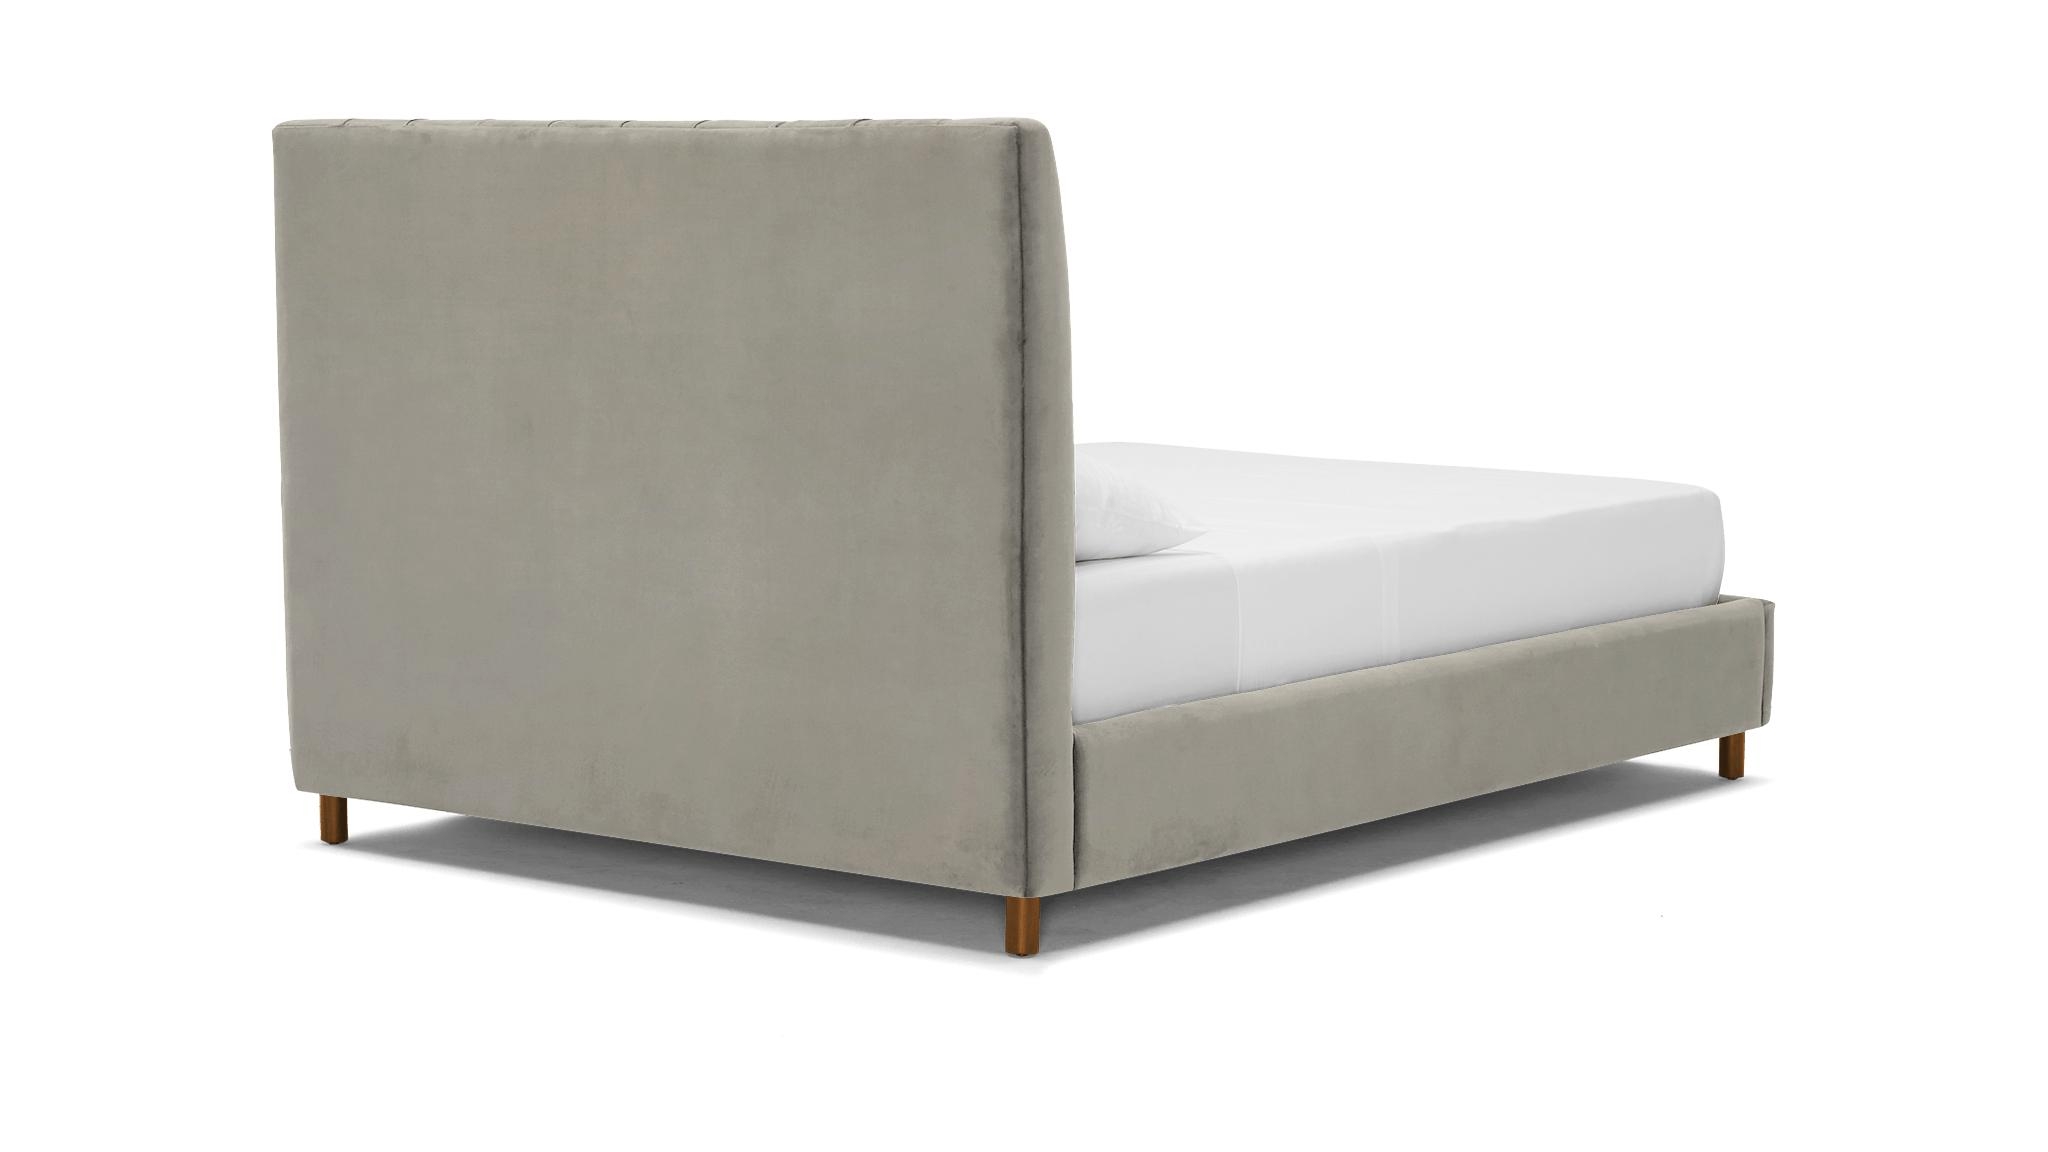 Gray Lotta Mid Century Modern Bed - Nico Ash - Mocha - Eastern King - Image 3